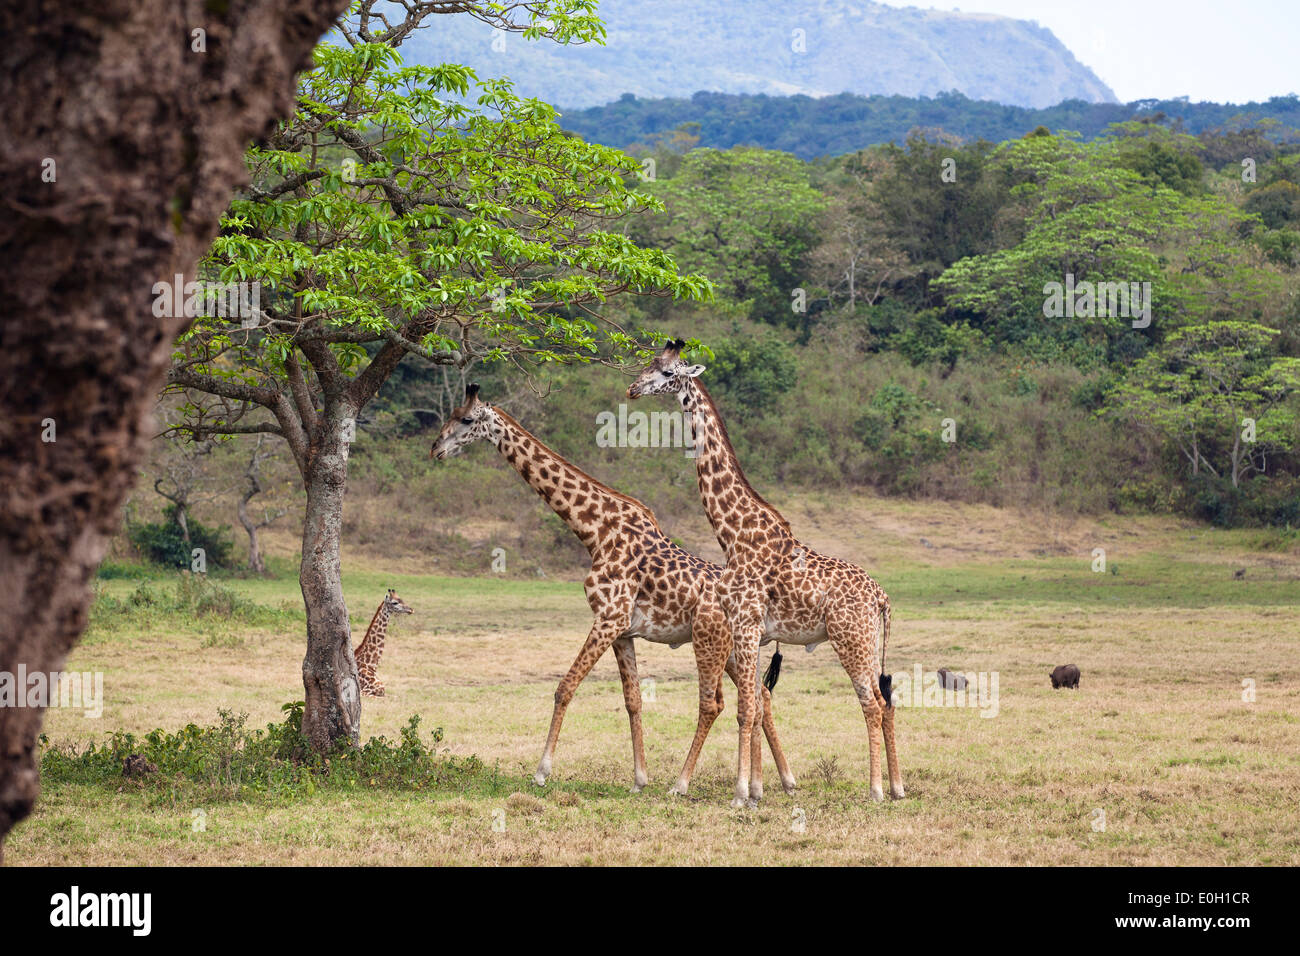 Two Massai Giraffes, Giraffa camelopardalis, Arusha National Park, Tanzania, East Africa, Africa Stock Photo